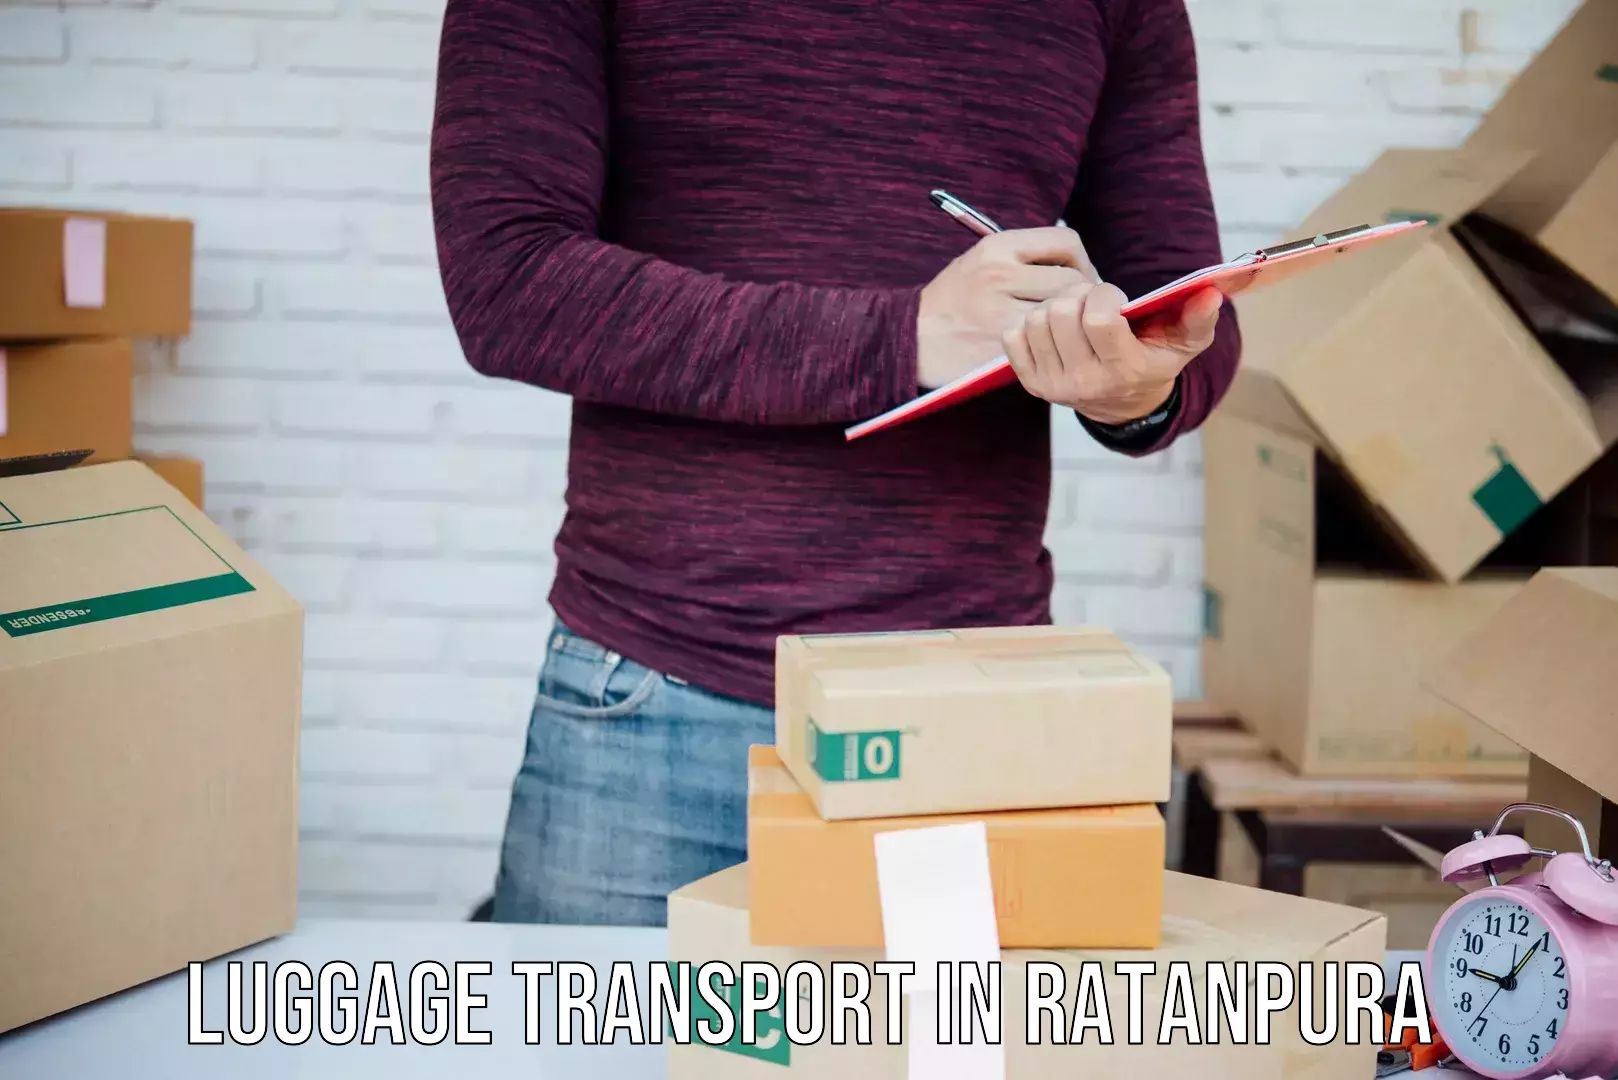 Baggage transport professionals in Ratanpura